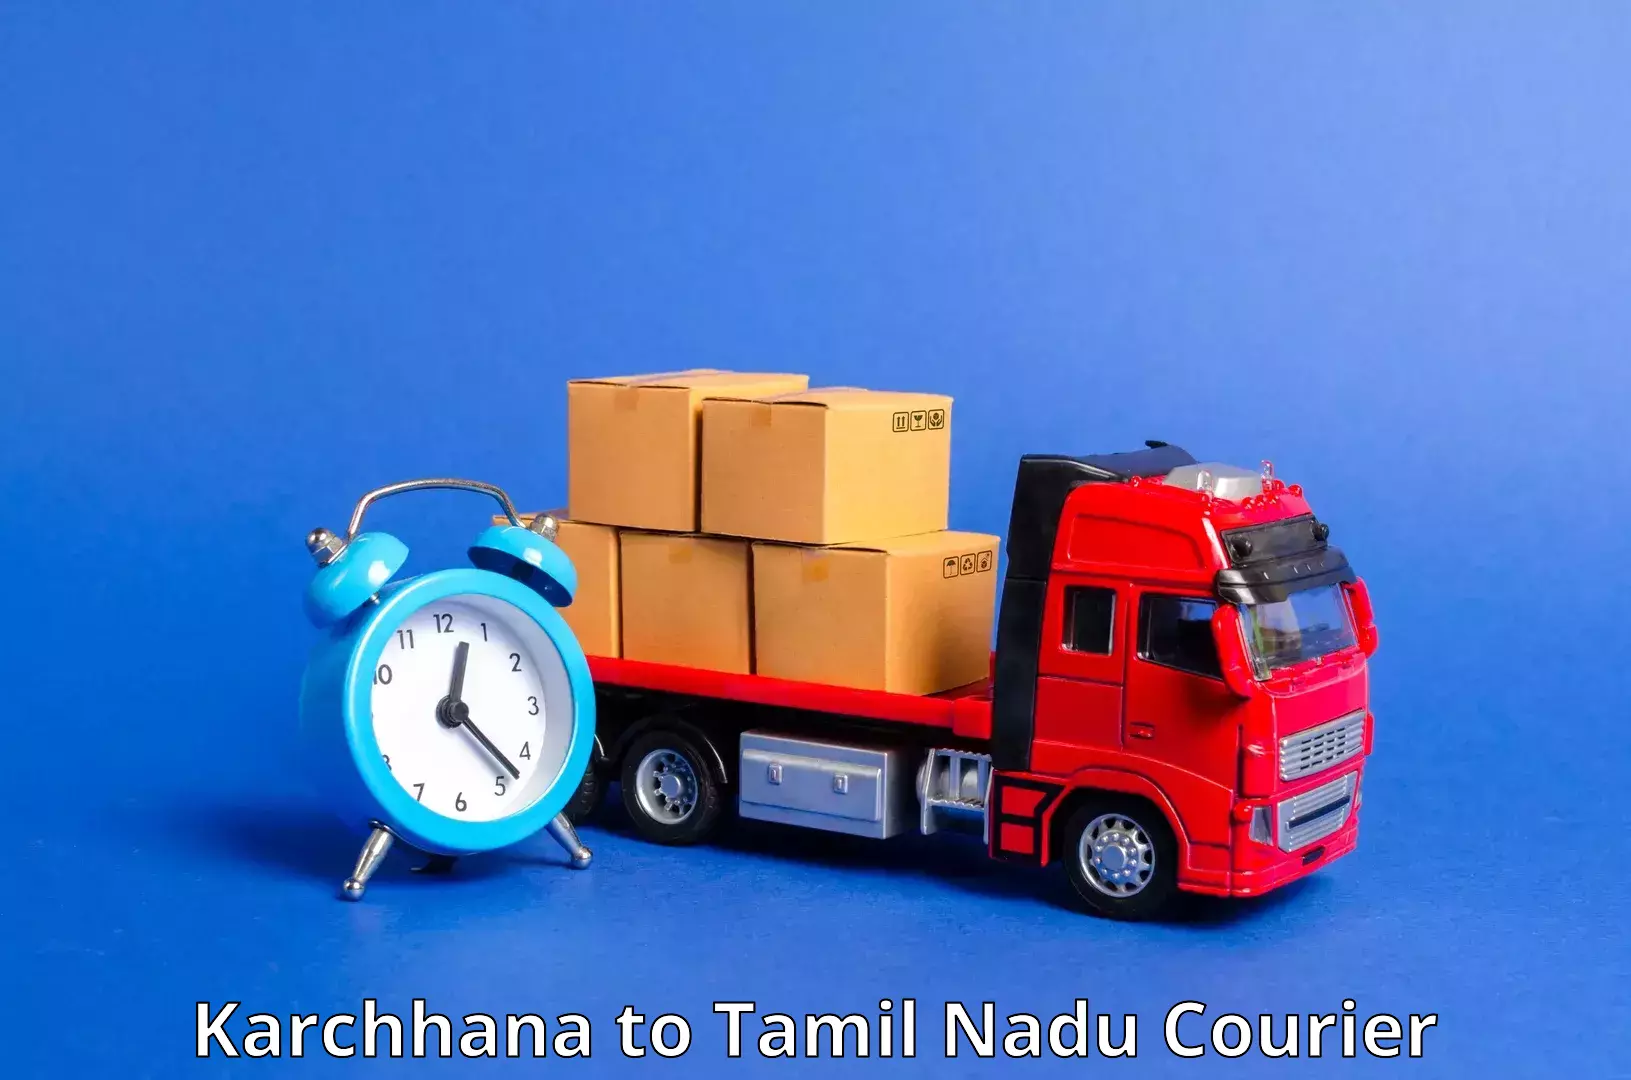 State-of-the-art courier technology Karchhana to Thiruvarur